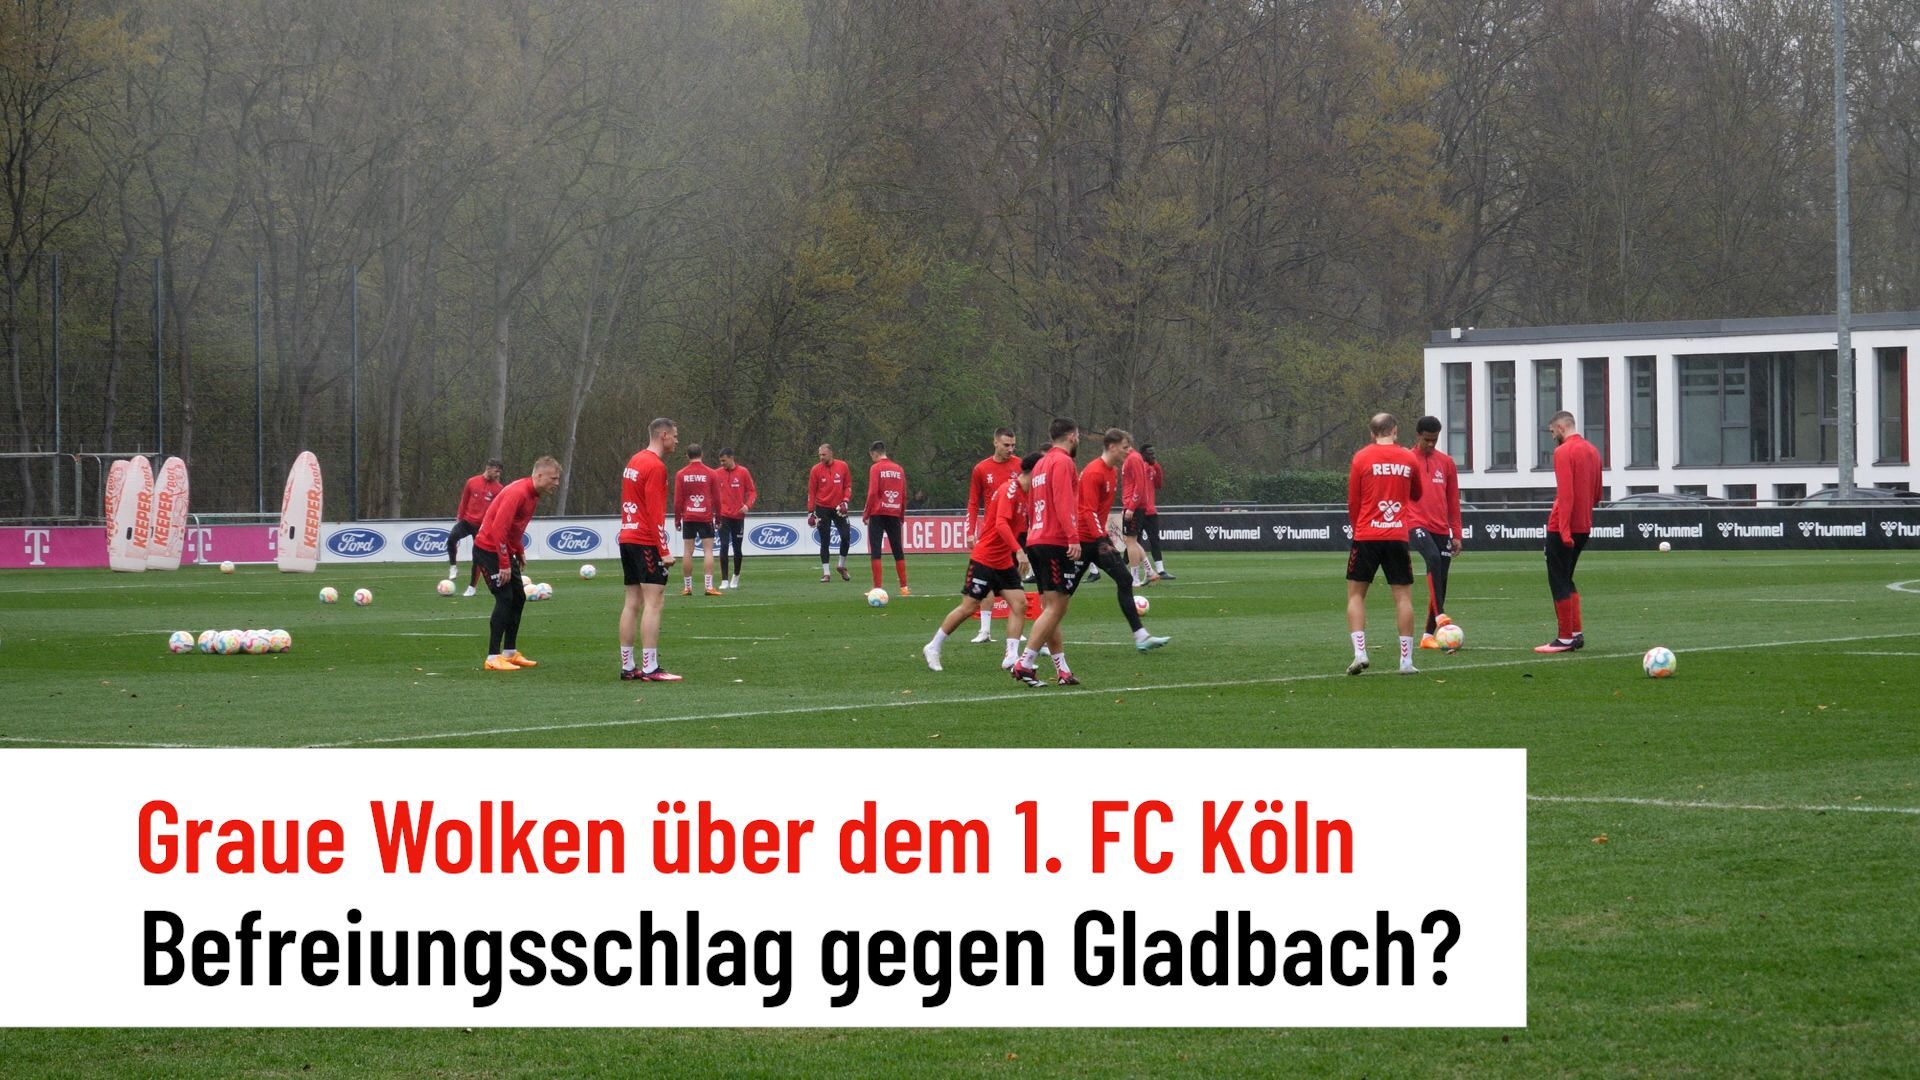 1. FC Köln: Will the liberation strike succeed against Gladbach?